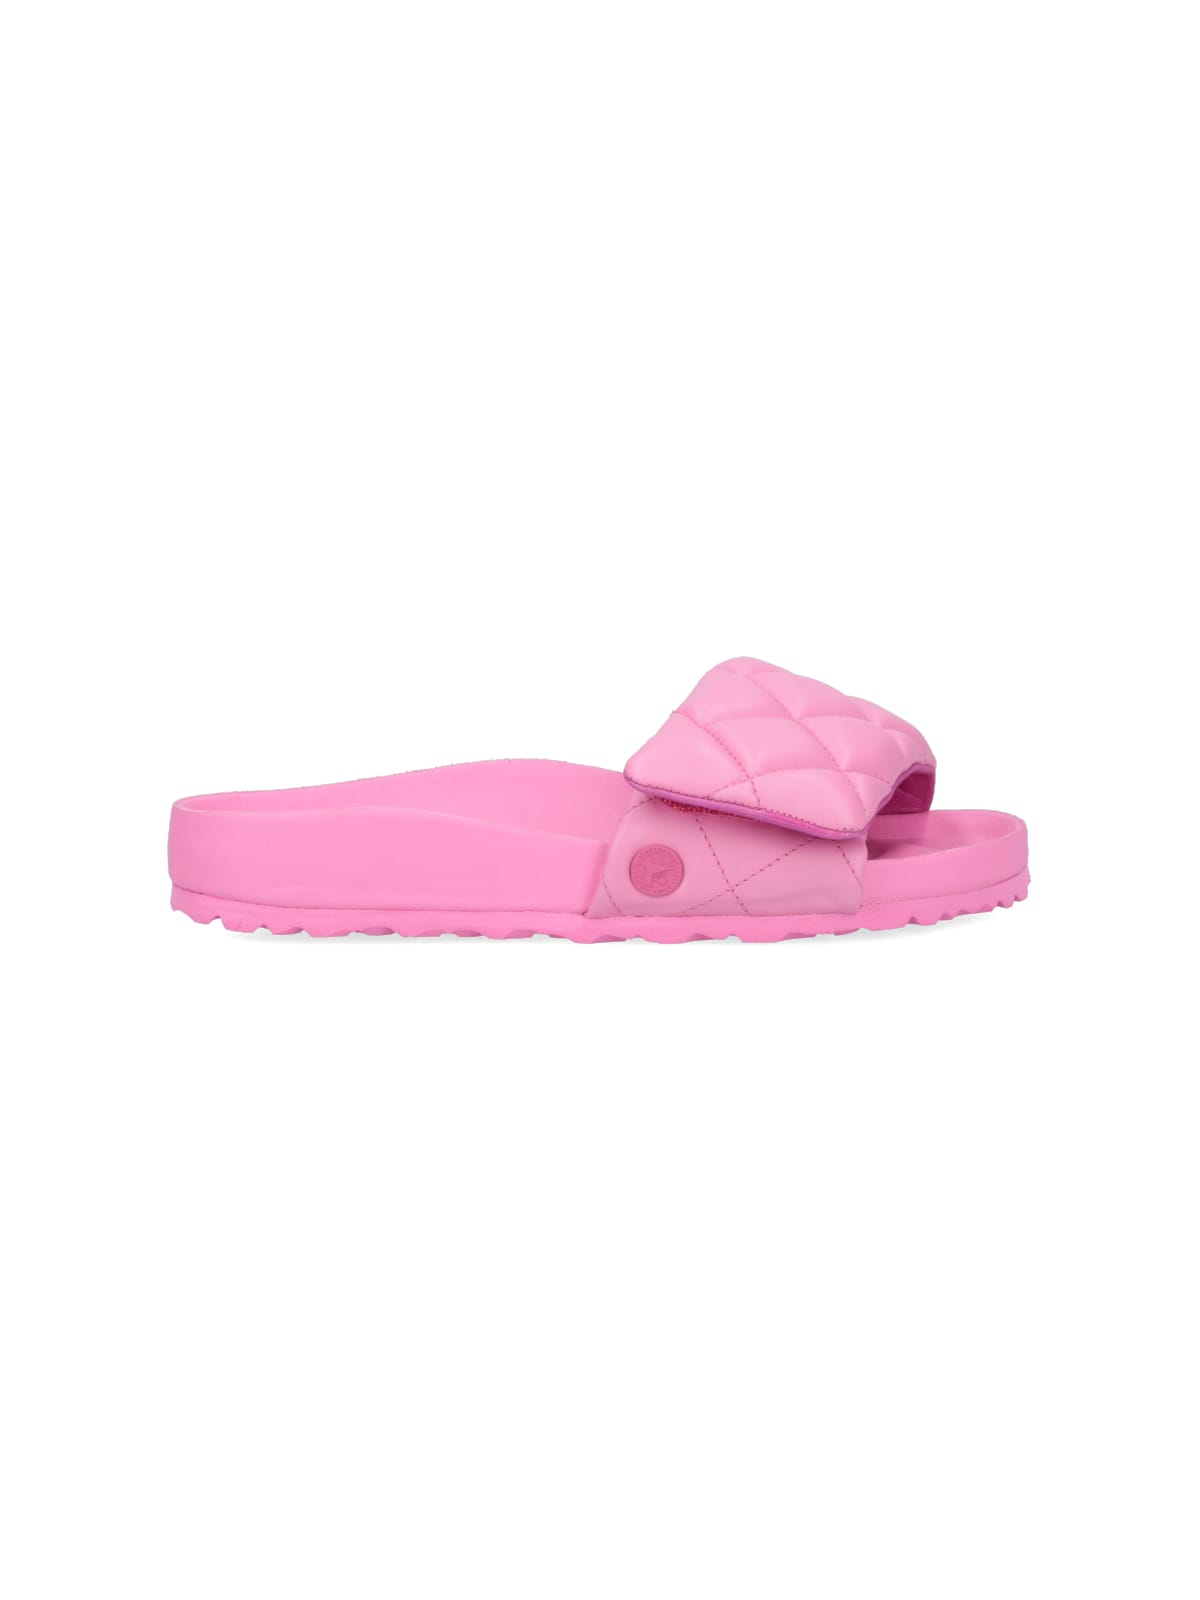 azalea Slide Sandals